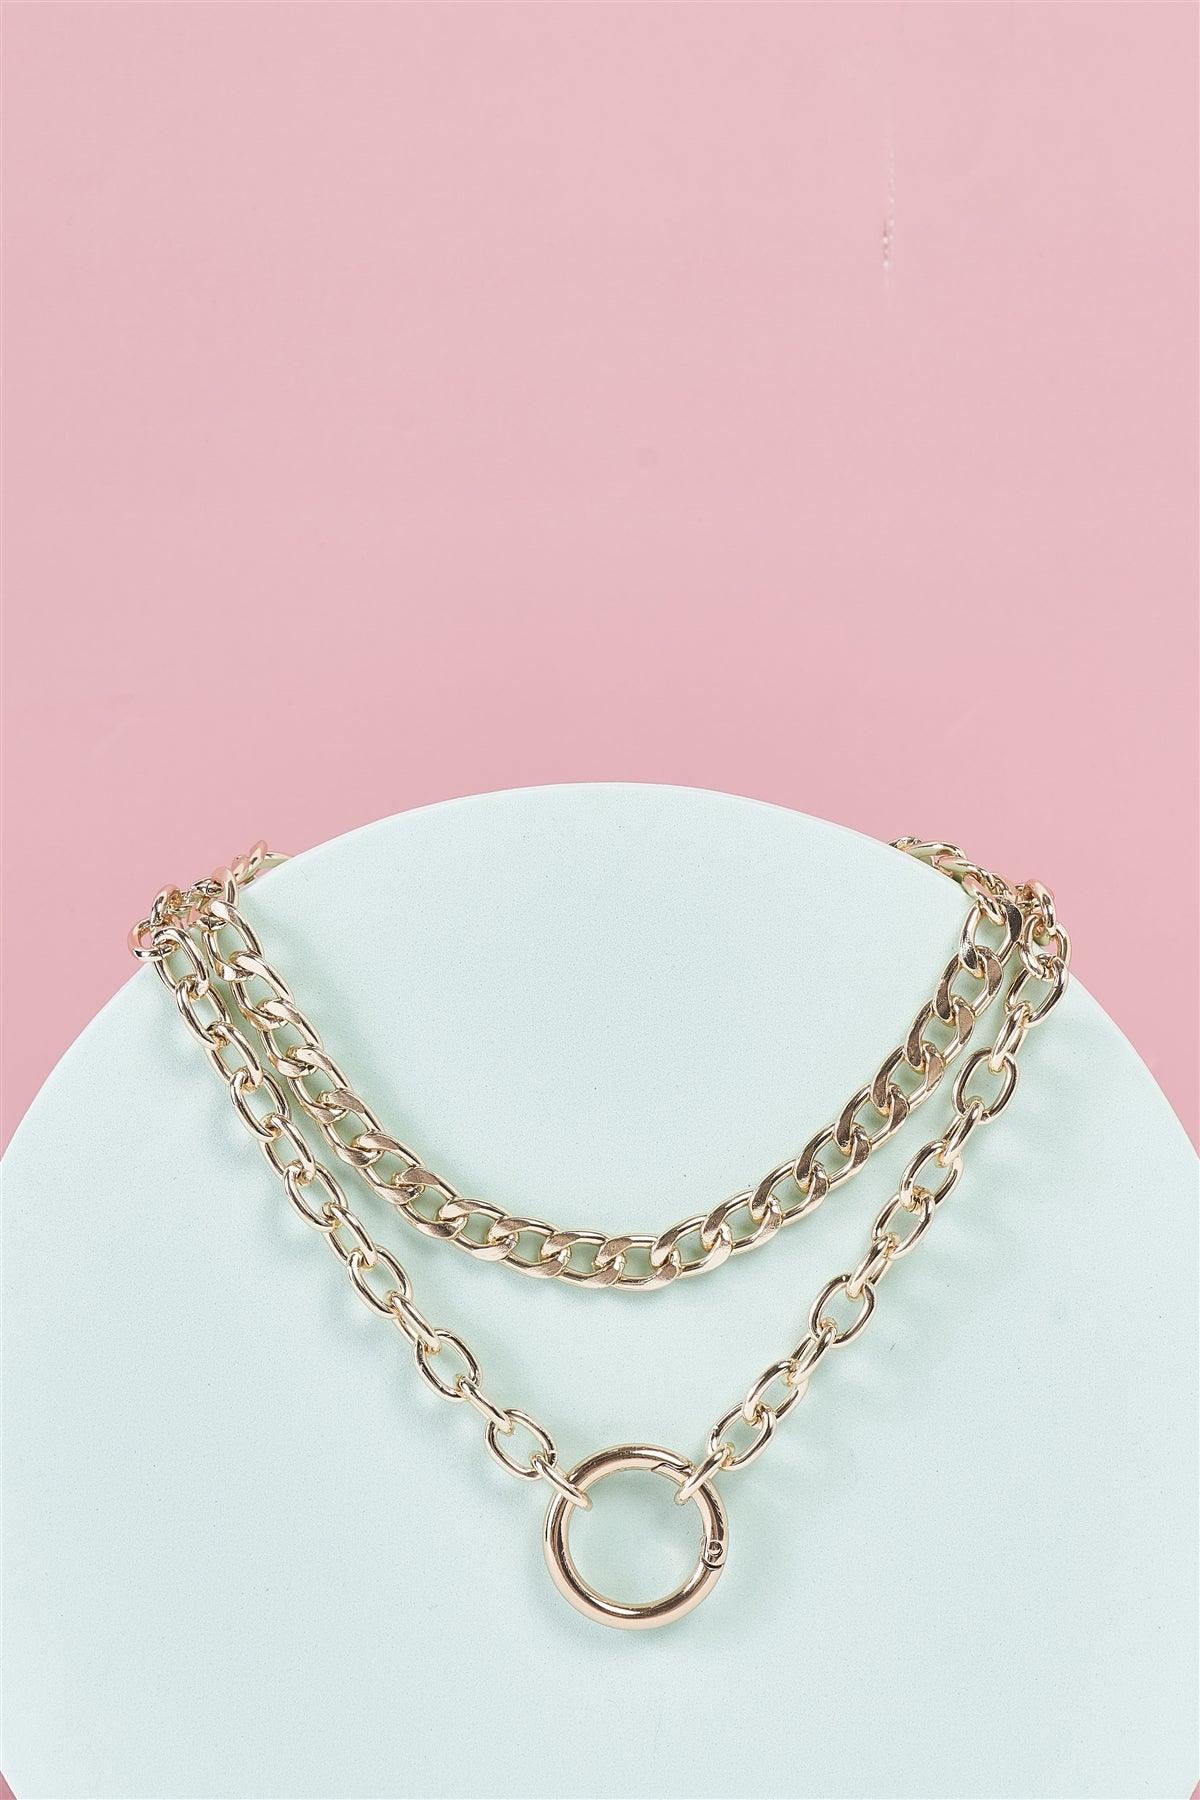 Gold Two Massive Chain Clasp Pendant Necklace /3 Pieces